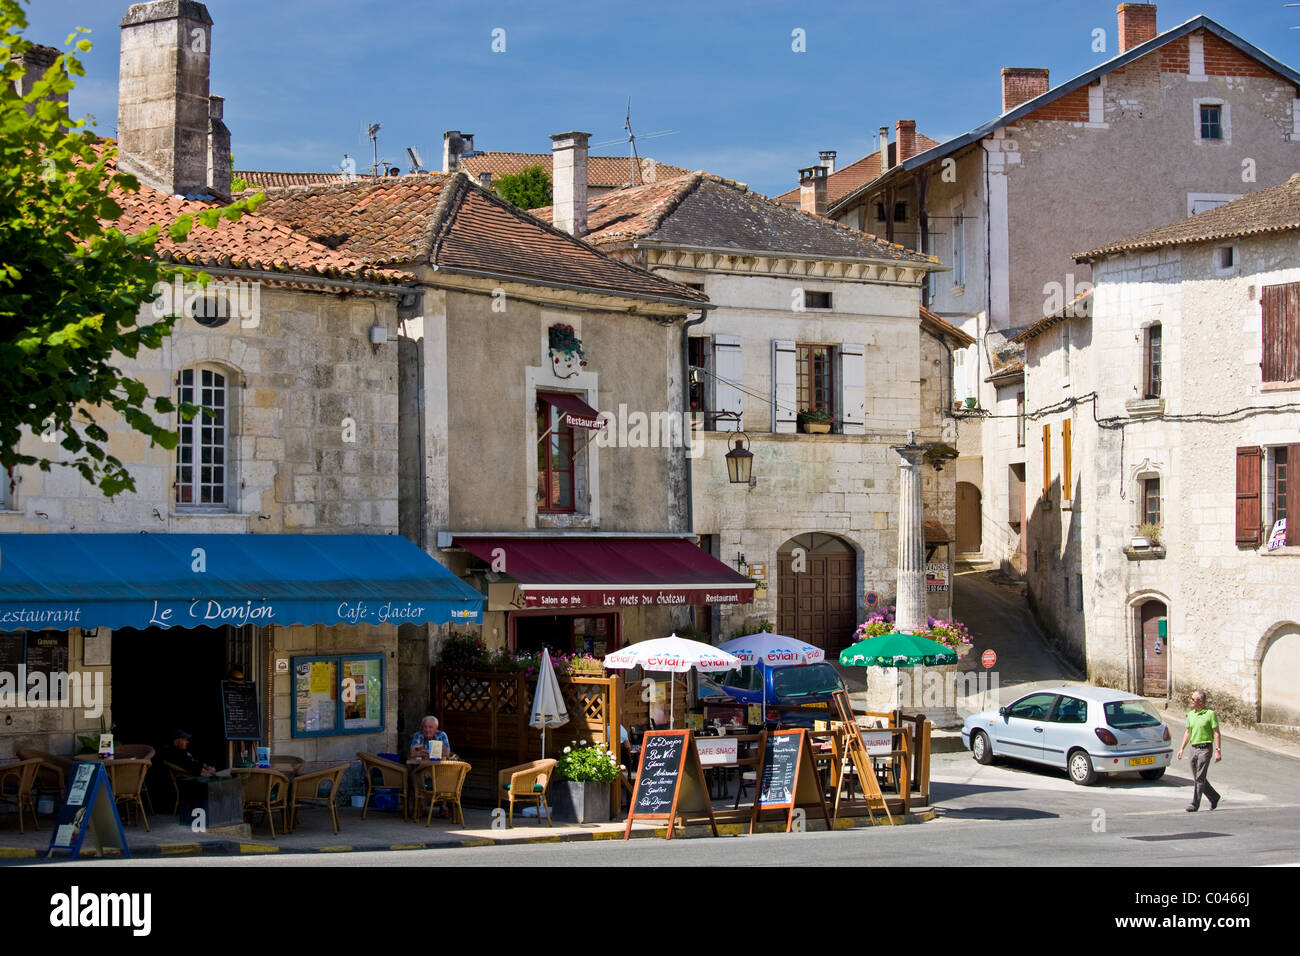 Pavement cafe in quaint town of Bourdeilles popular tourist destination near Brantome in Northern Dordogne, France Stock Photo